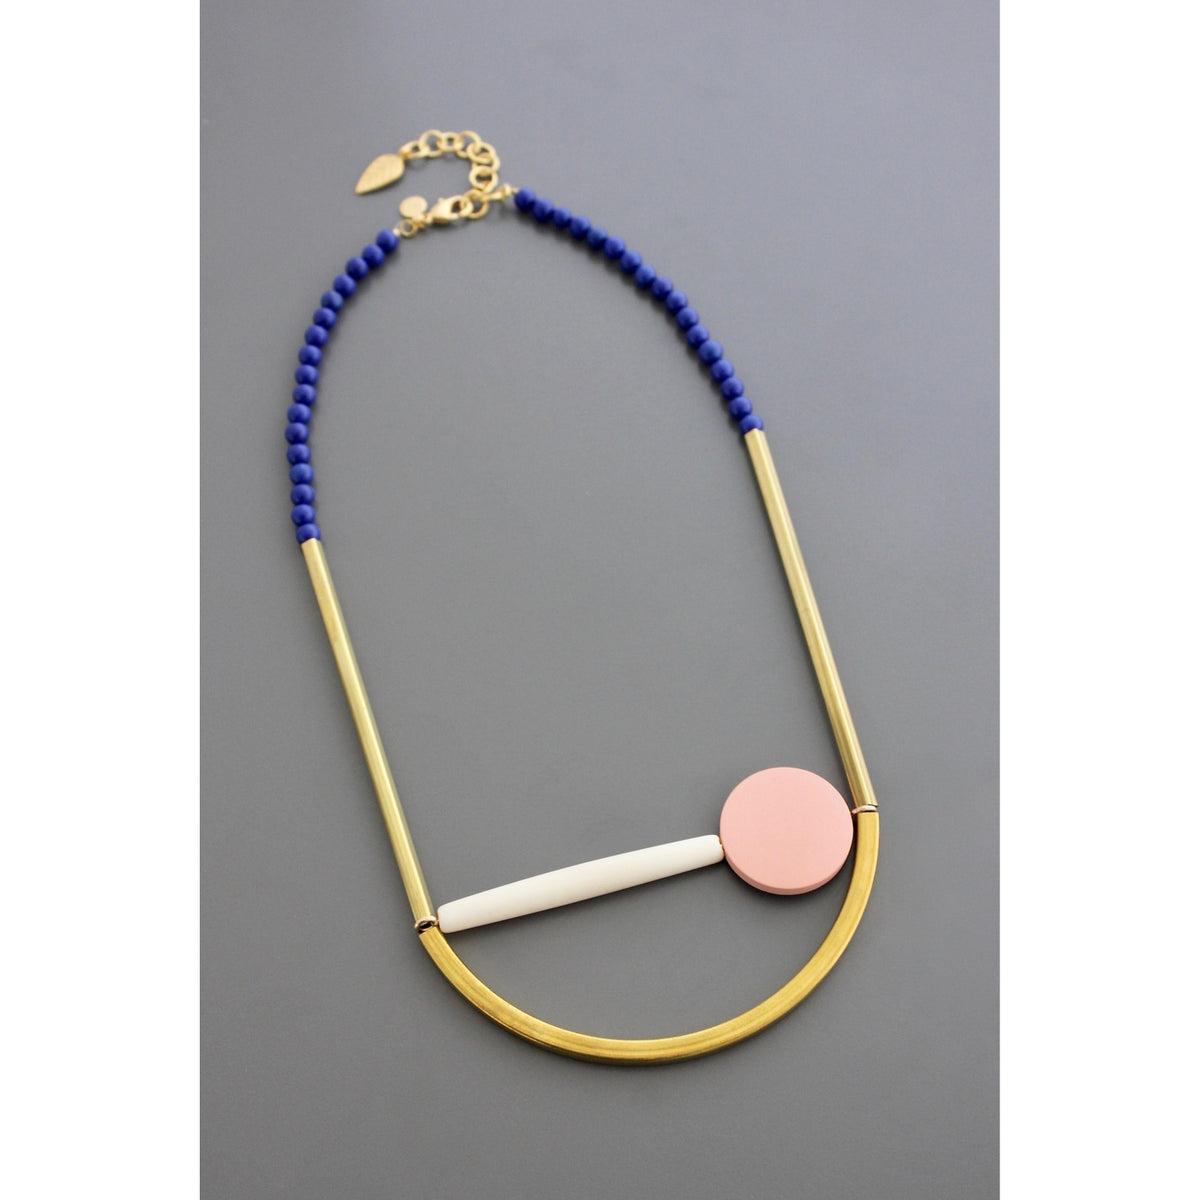 David Aubrey Geometric Blue and Pink Necklace